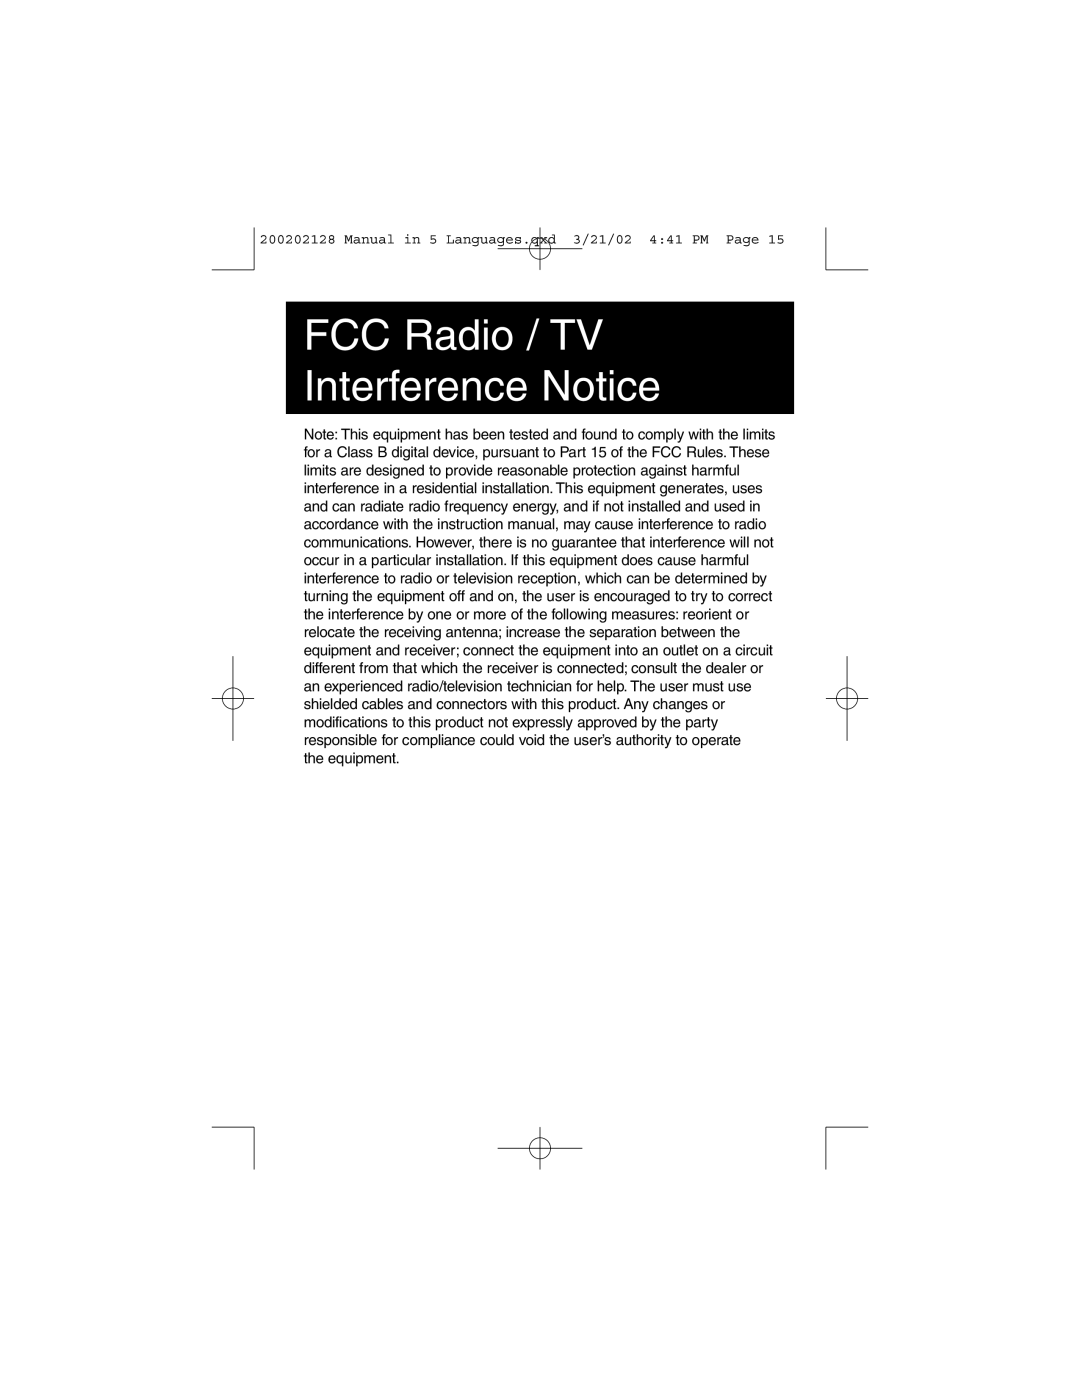 Tripp Lite F200-003-R user manual FCC Radio / TV Interference Notice 